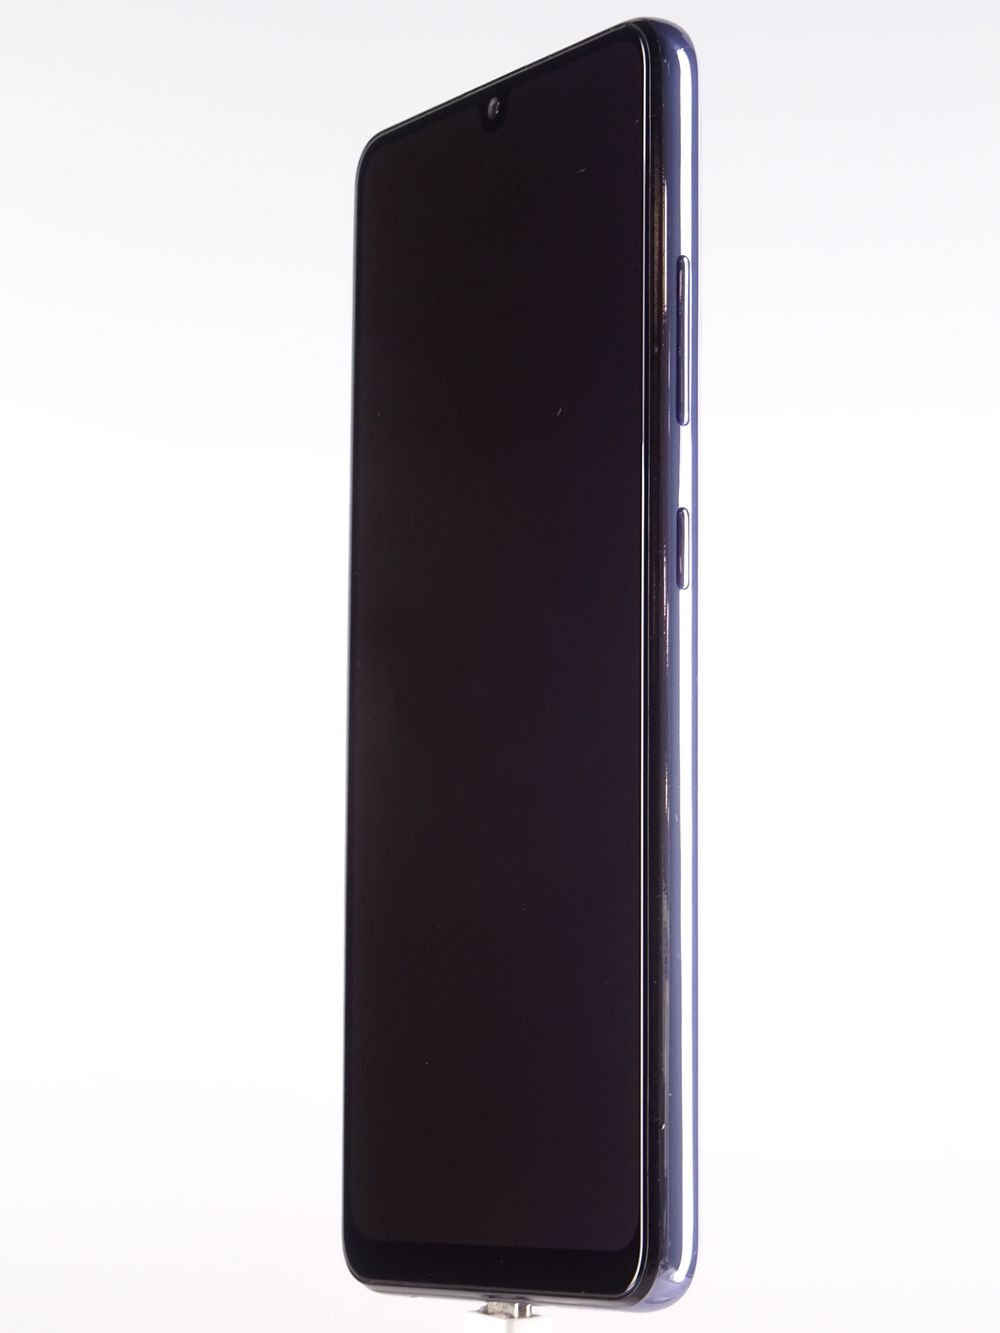 Мобилен телефон Samsung, Galaxy A32 5G Dual Sim, 128 GB, Violet,  Като нов